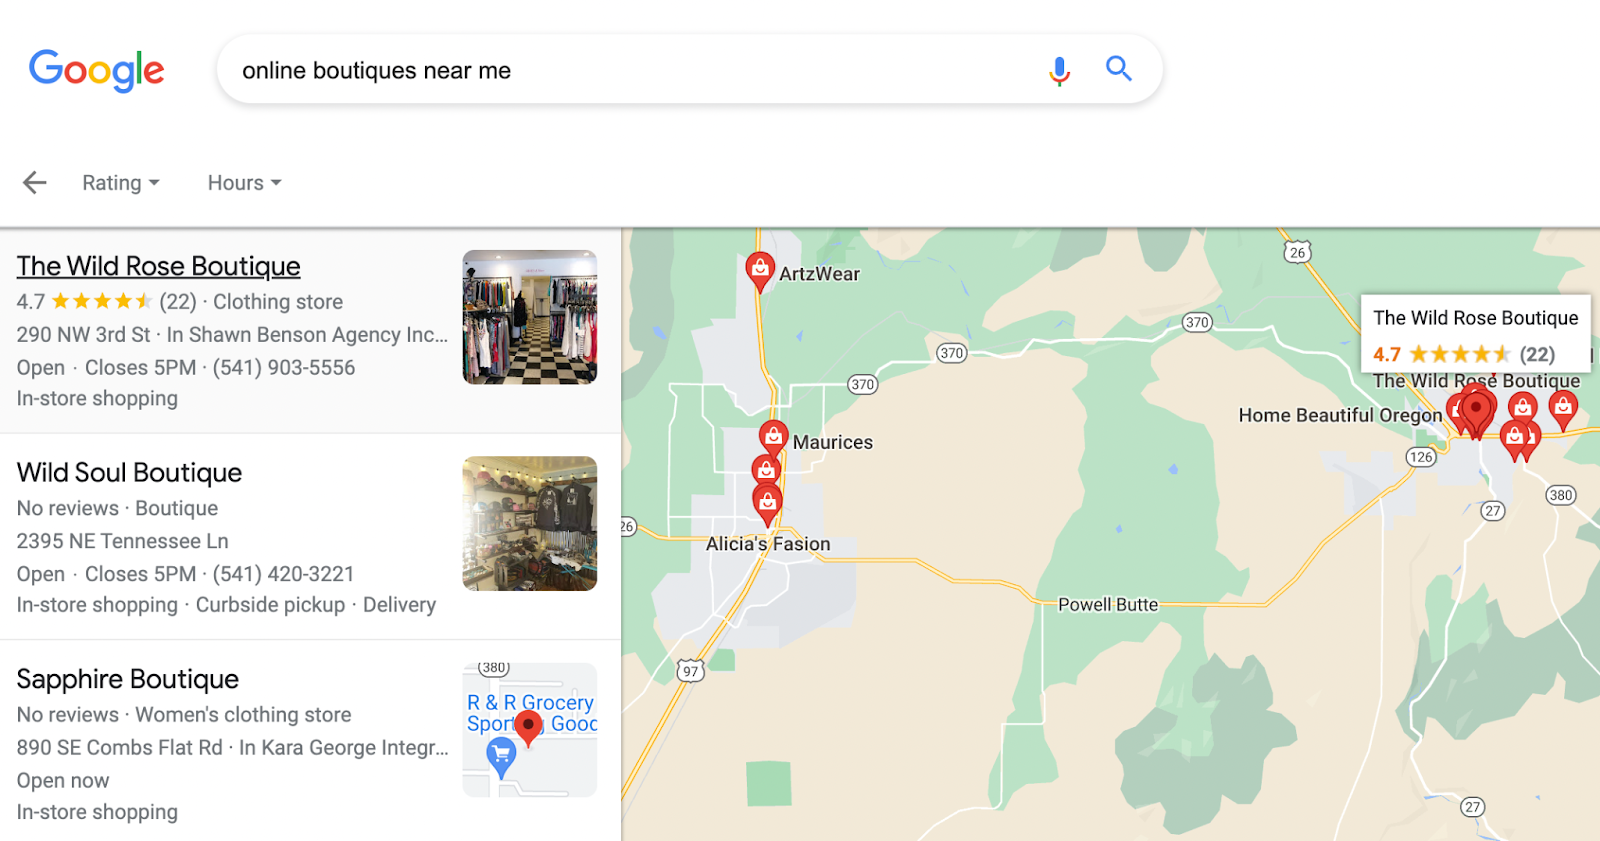 Google Places listings